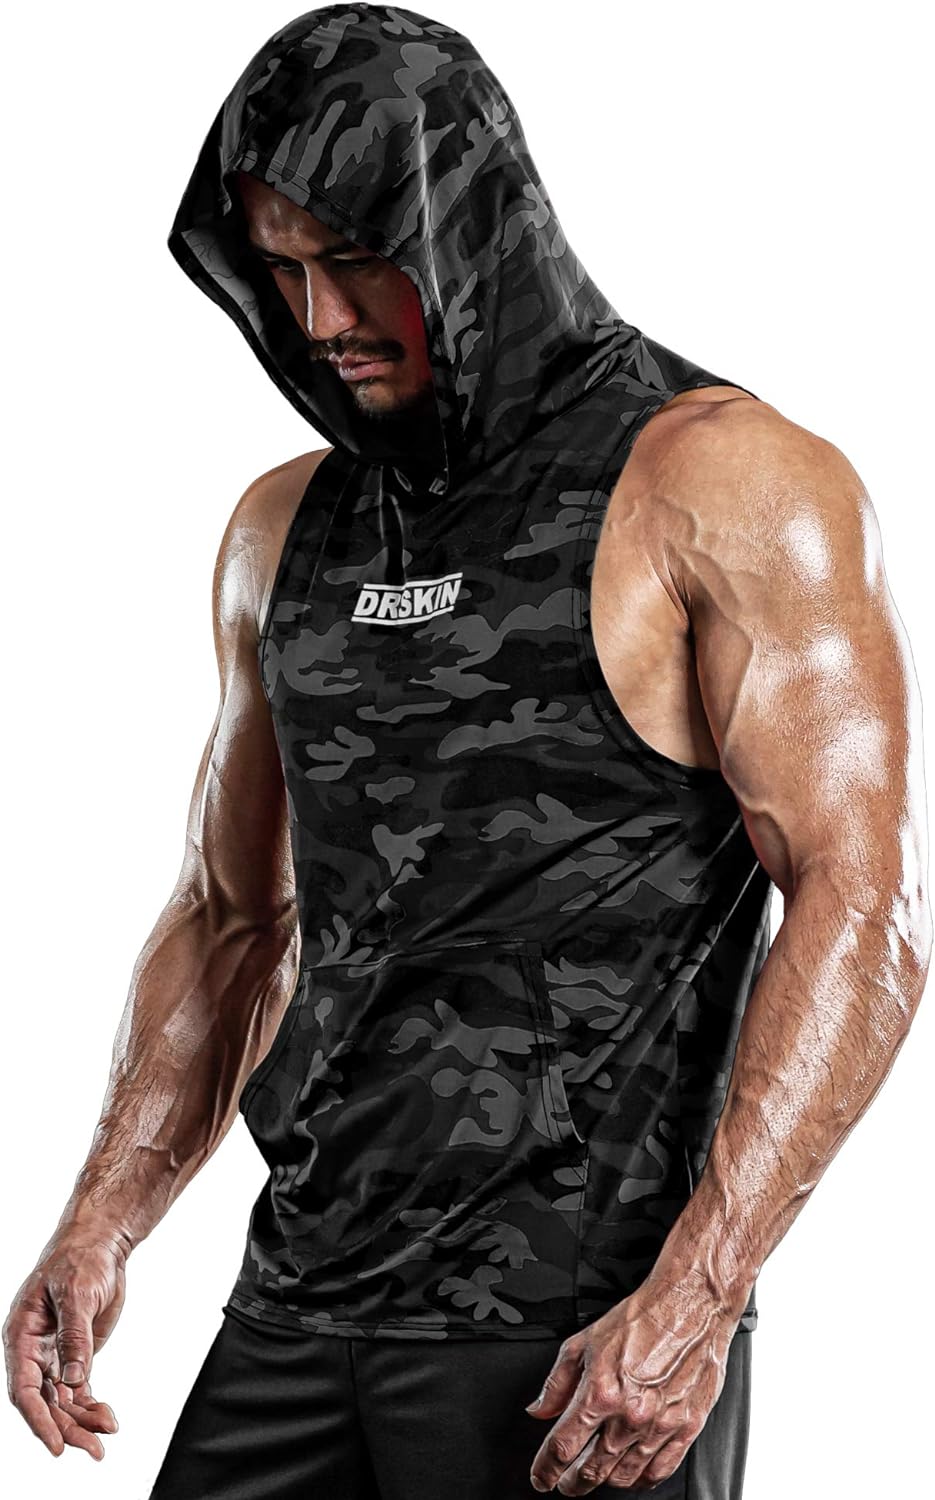 Man Hooded Sleeveless Shirt WholeSale - Price List, Bulk Buy at